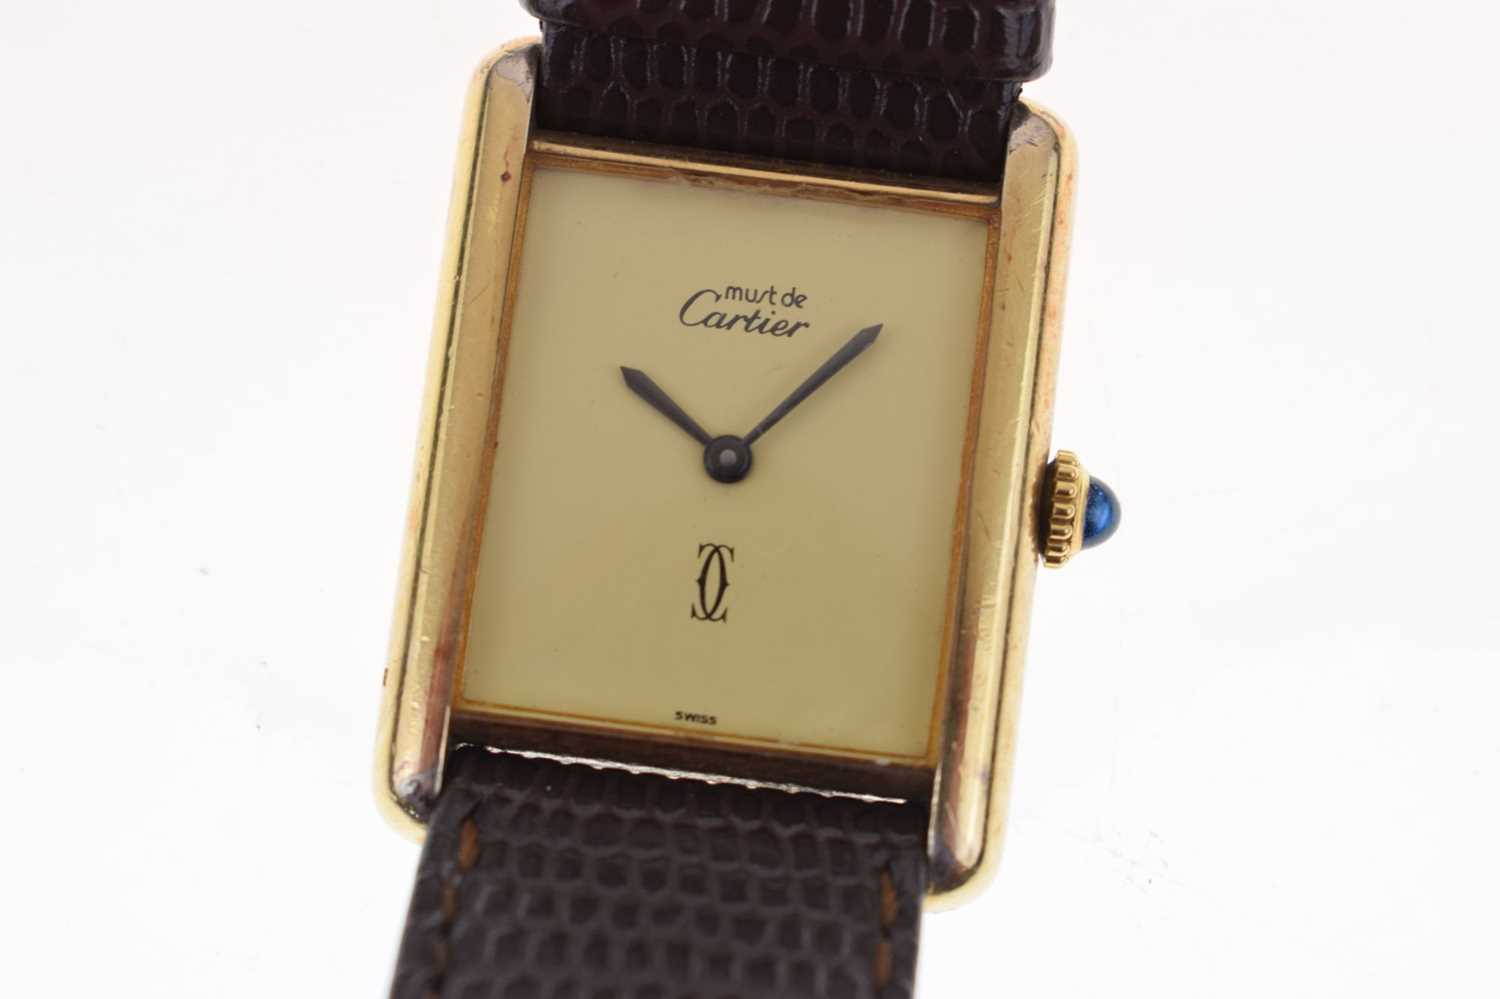 Cartier - Lady's Must de Tank silver gilt cased wristwatch - Image 3 of 8